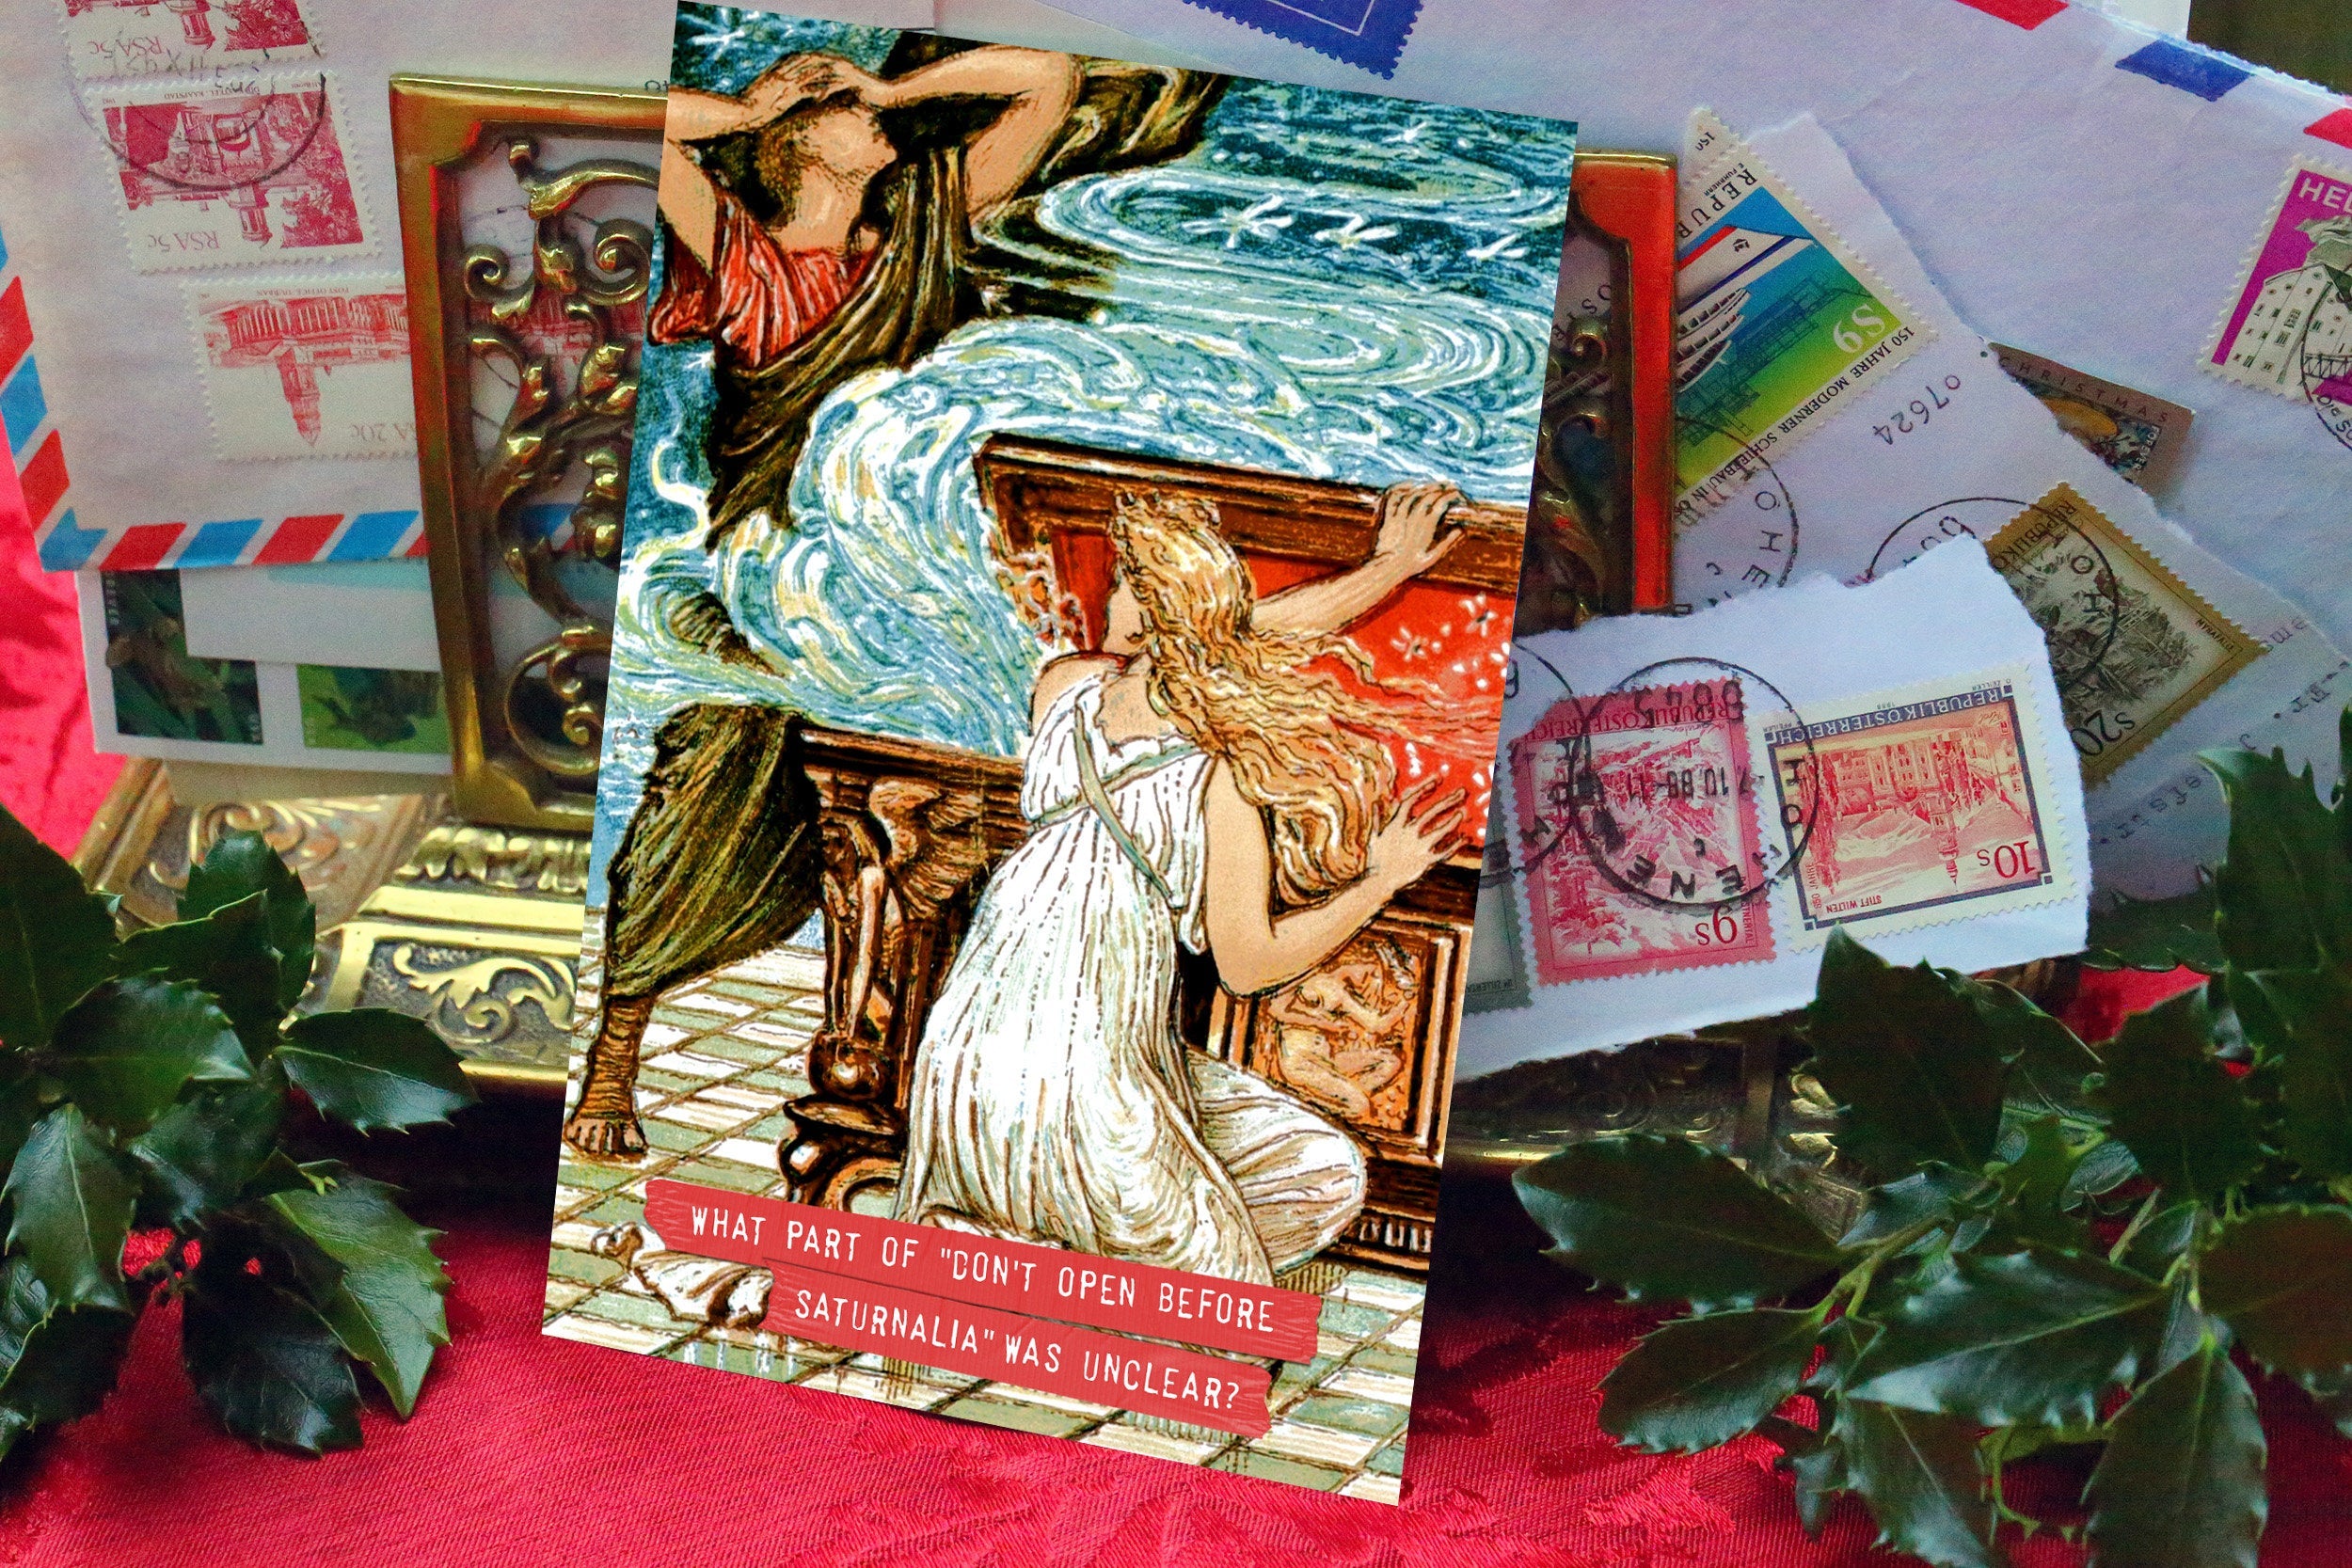 Pandora's Box Saturnalia Pagan Holiday Postcards/Greeting Cards, Exclusively Designed, 12 Cards